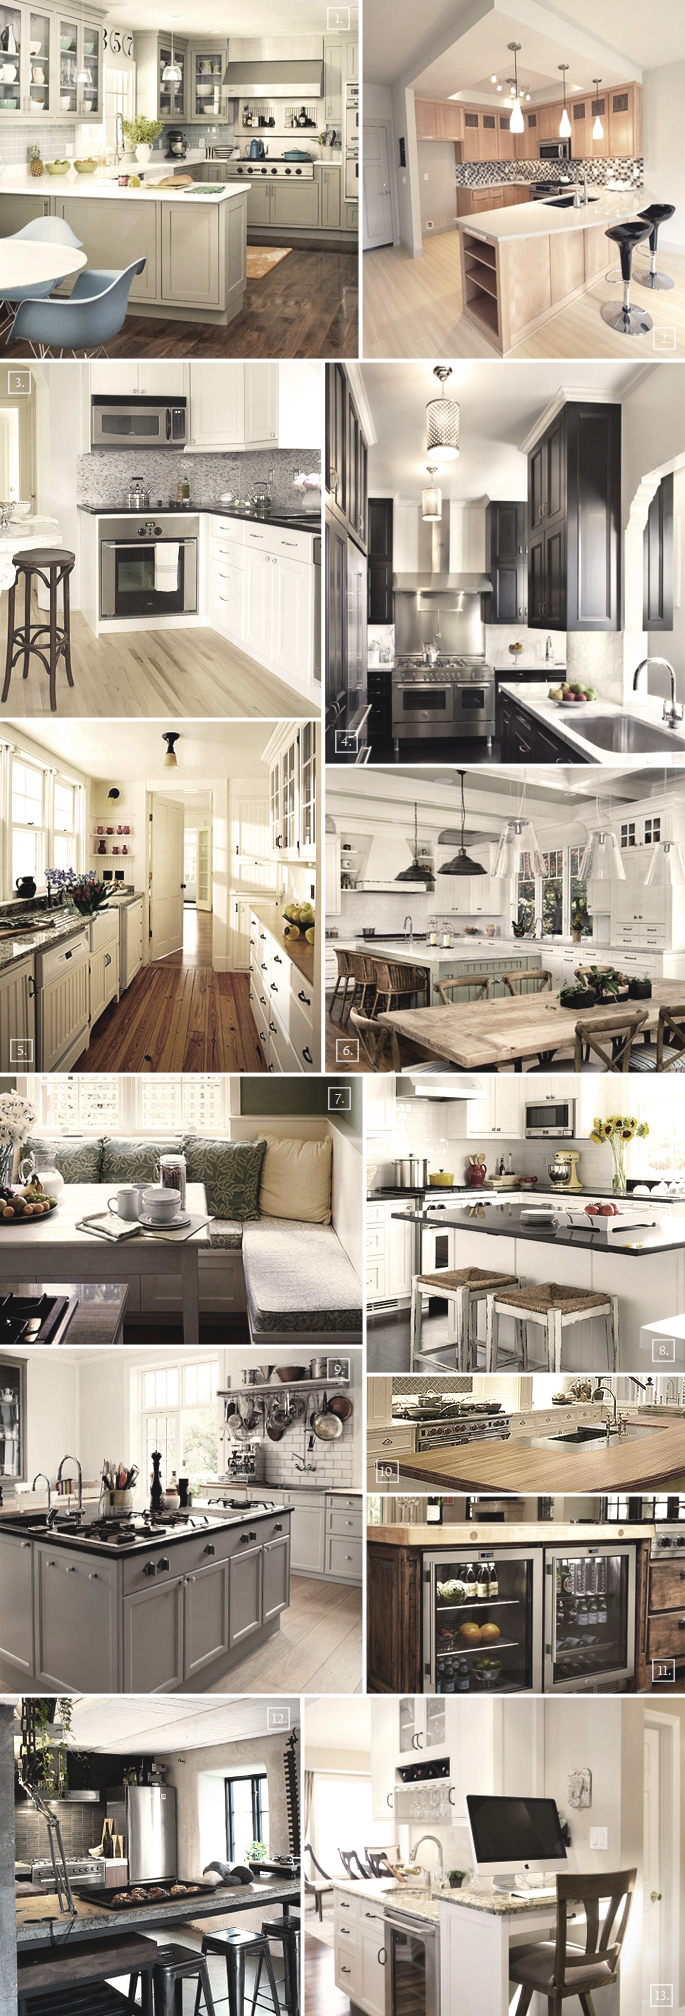 Kitchen Layout Ideas and Designs